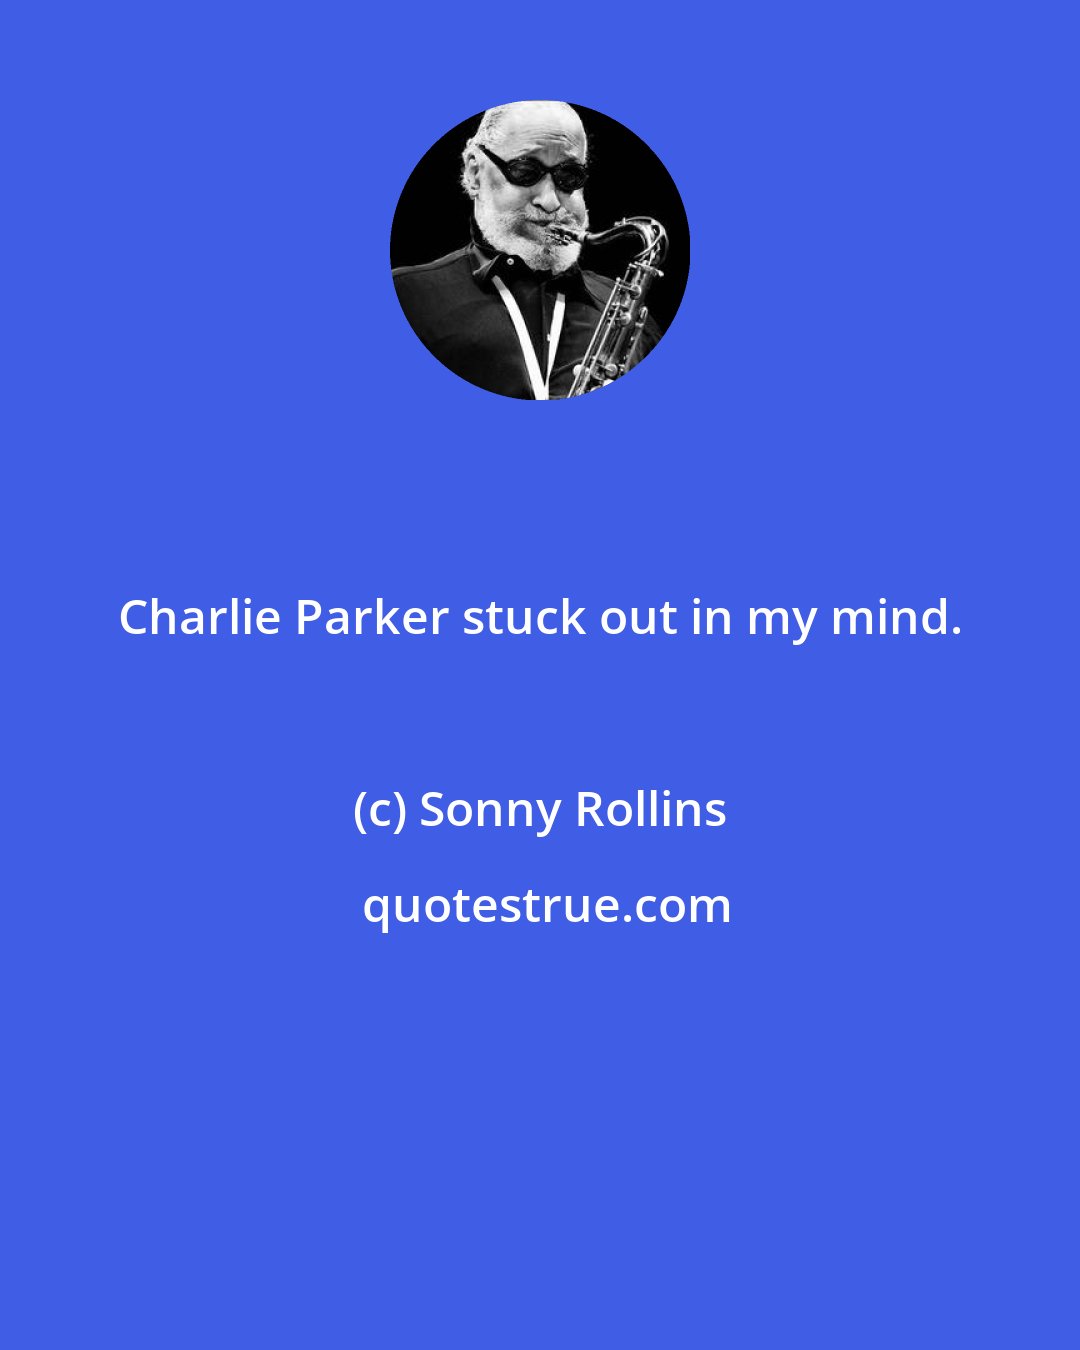 Sonny Rollins: Charlie Parker stuck out in my mind.